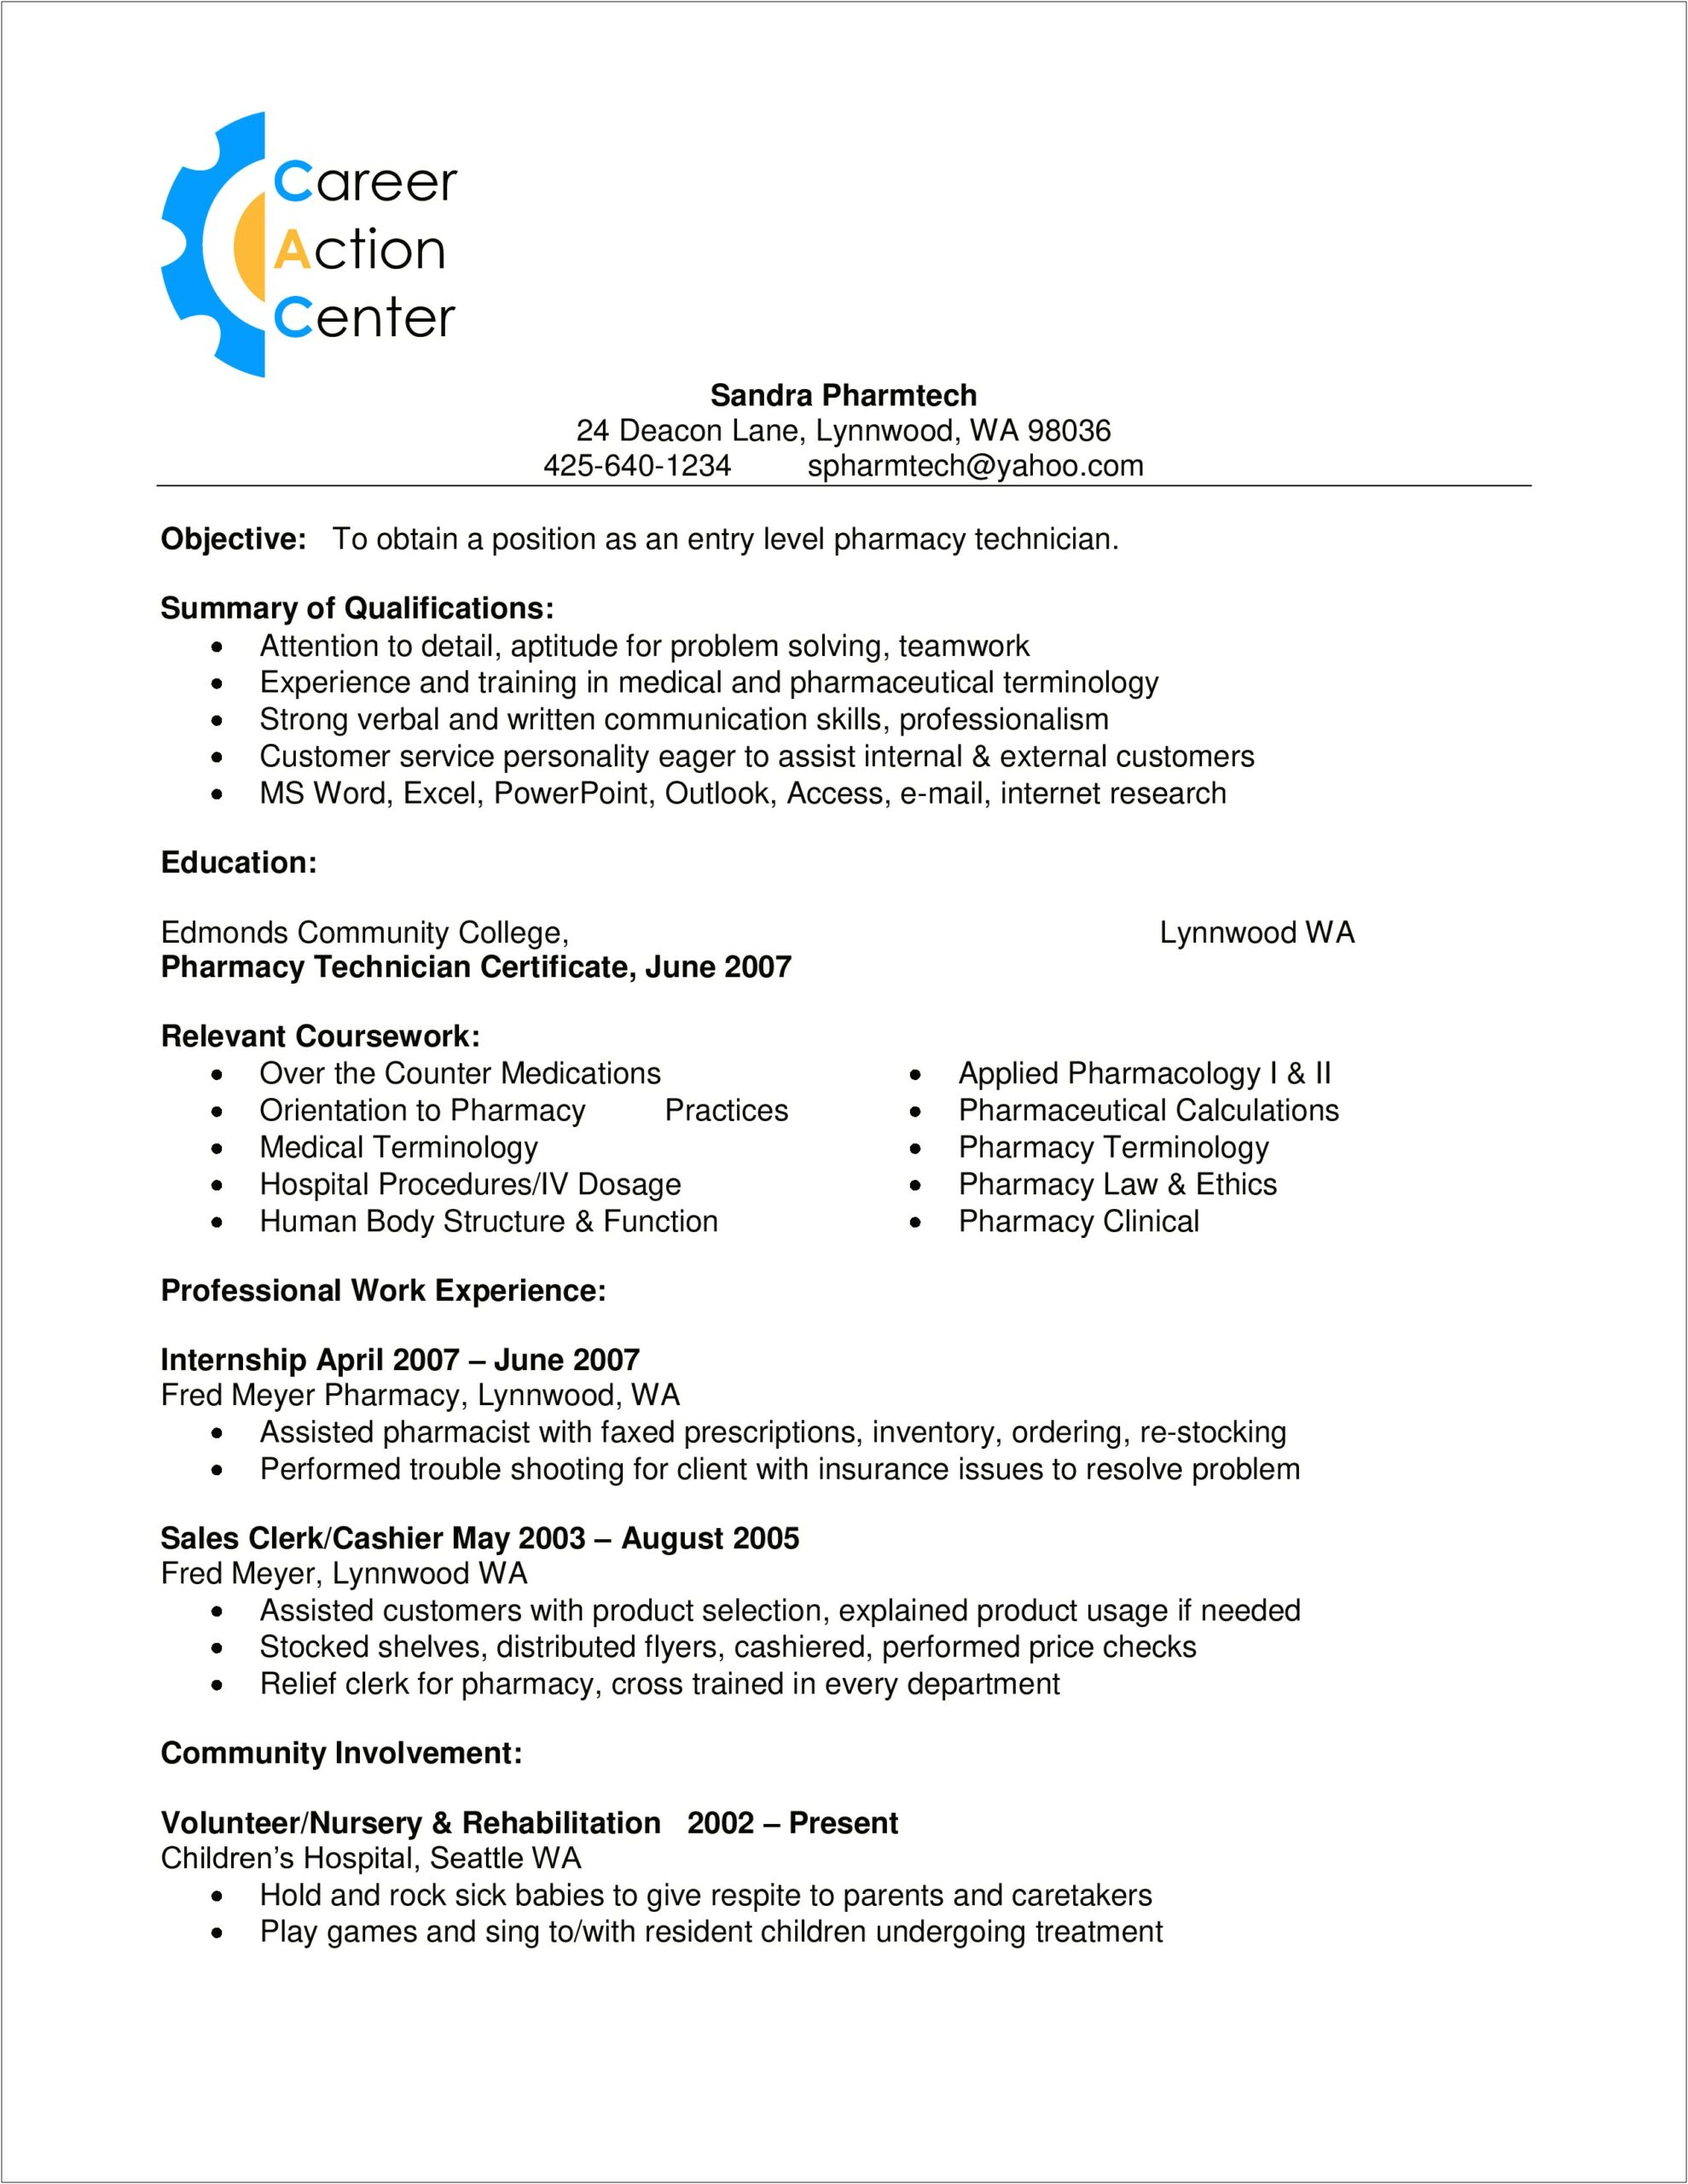 Resume Objective For Entry Level Pharmacy Technician